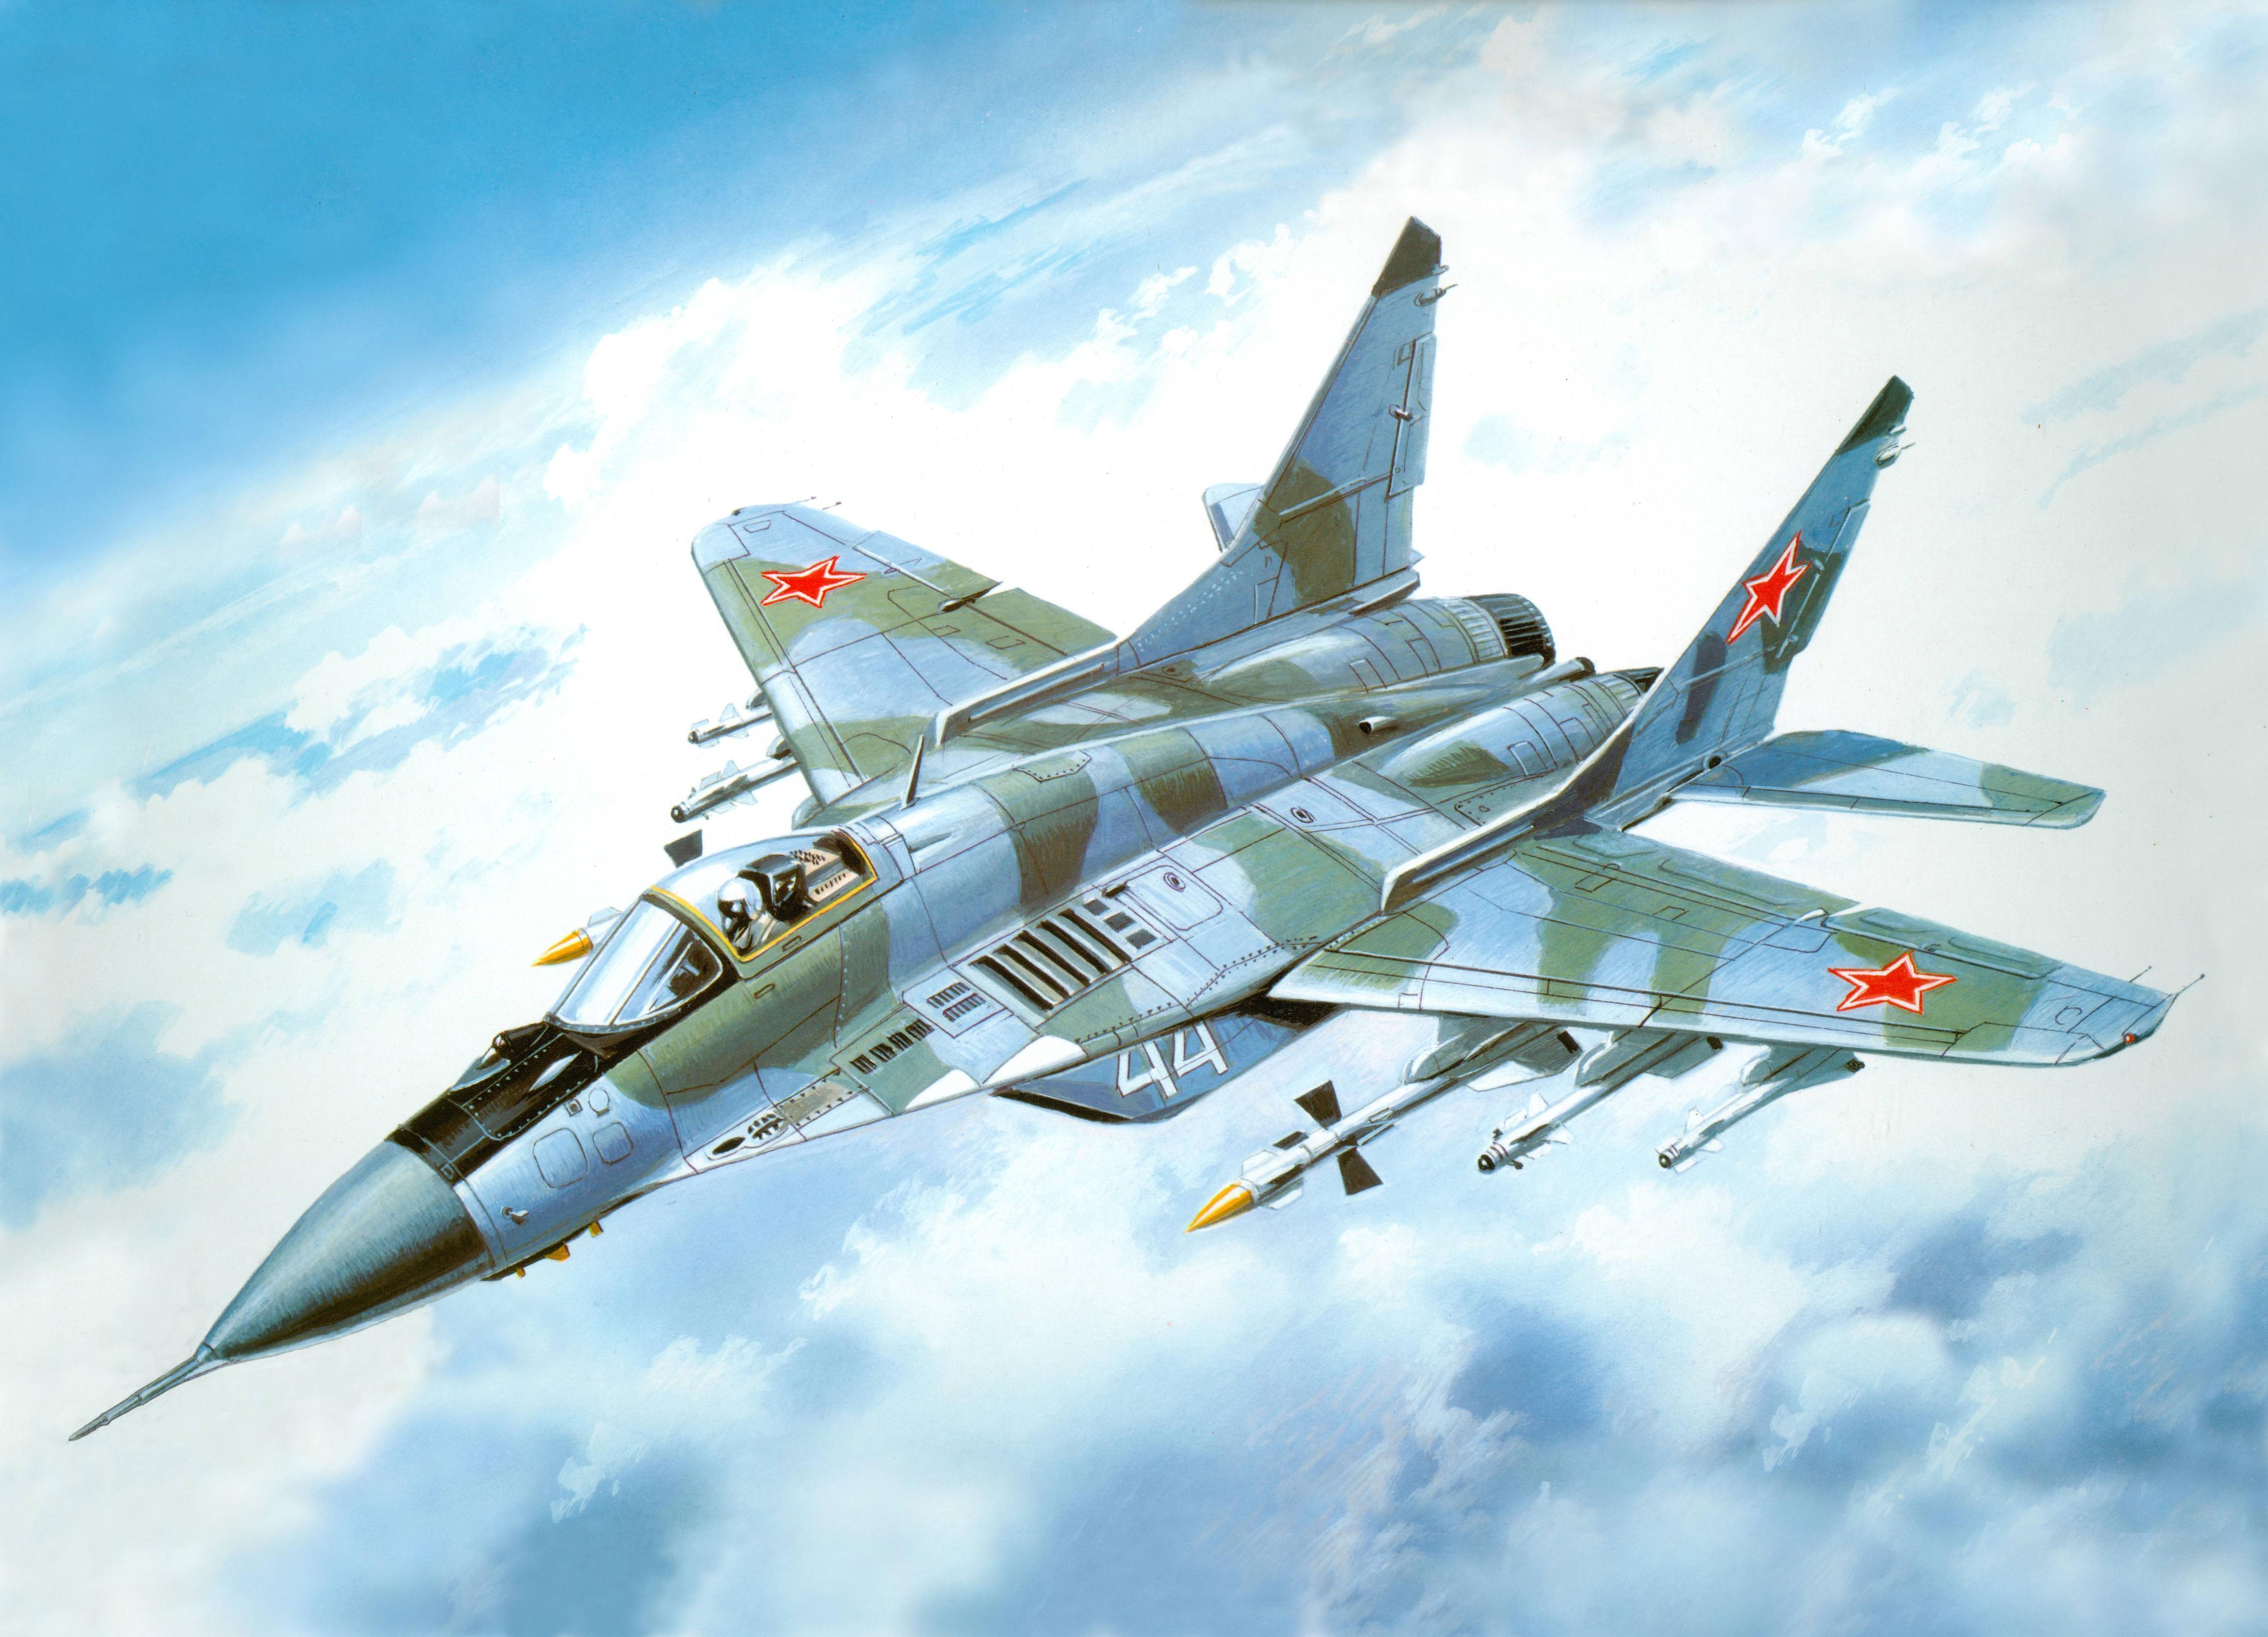 Mikoyan MiG 29 Free Desktop Wallpaper. Risewall